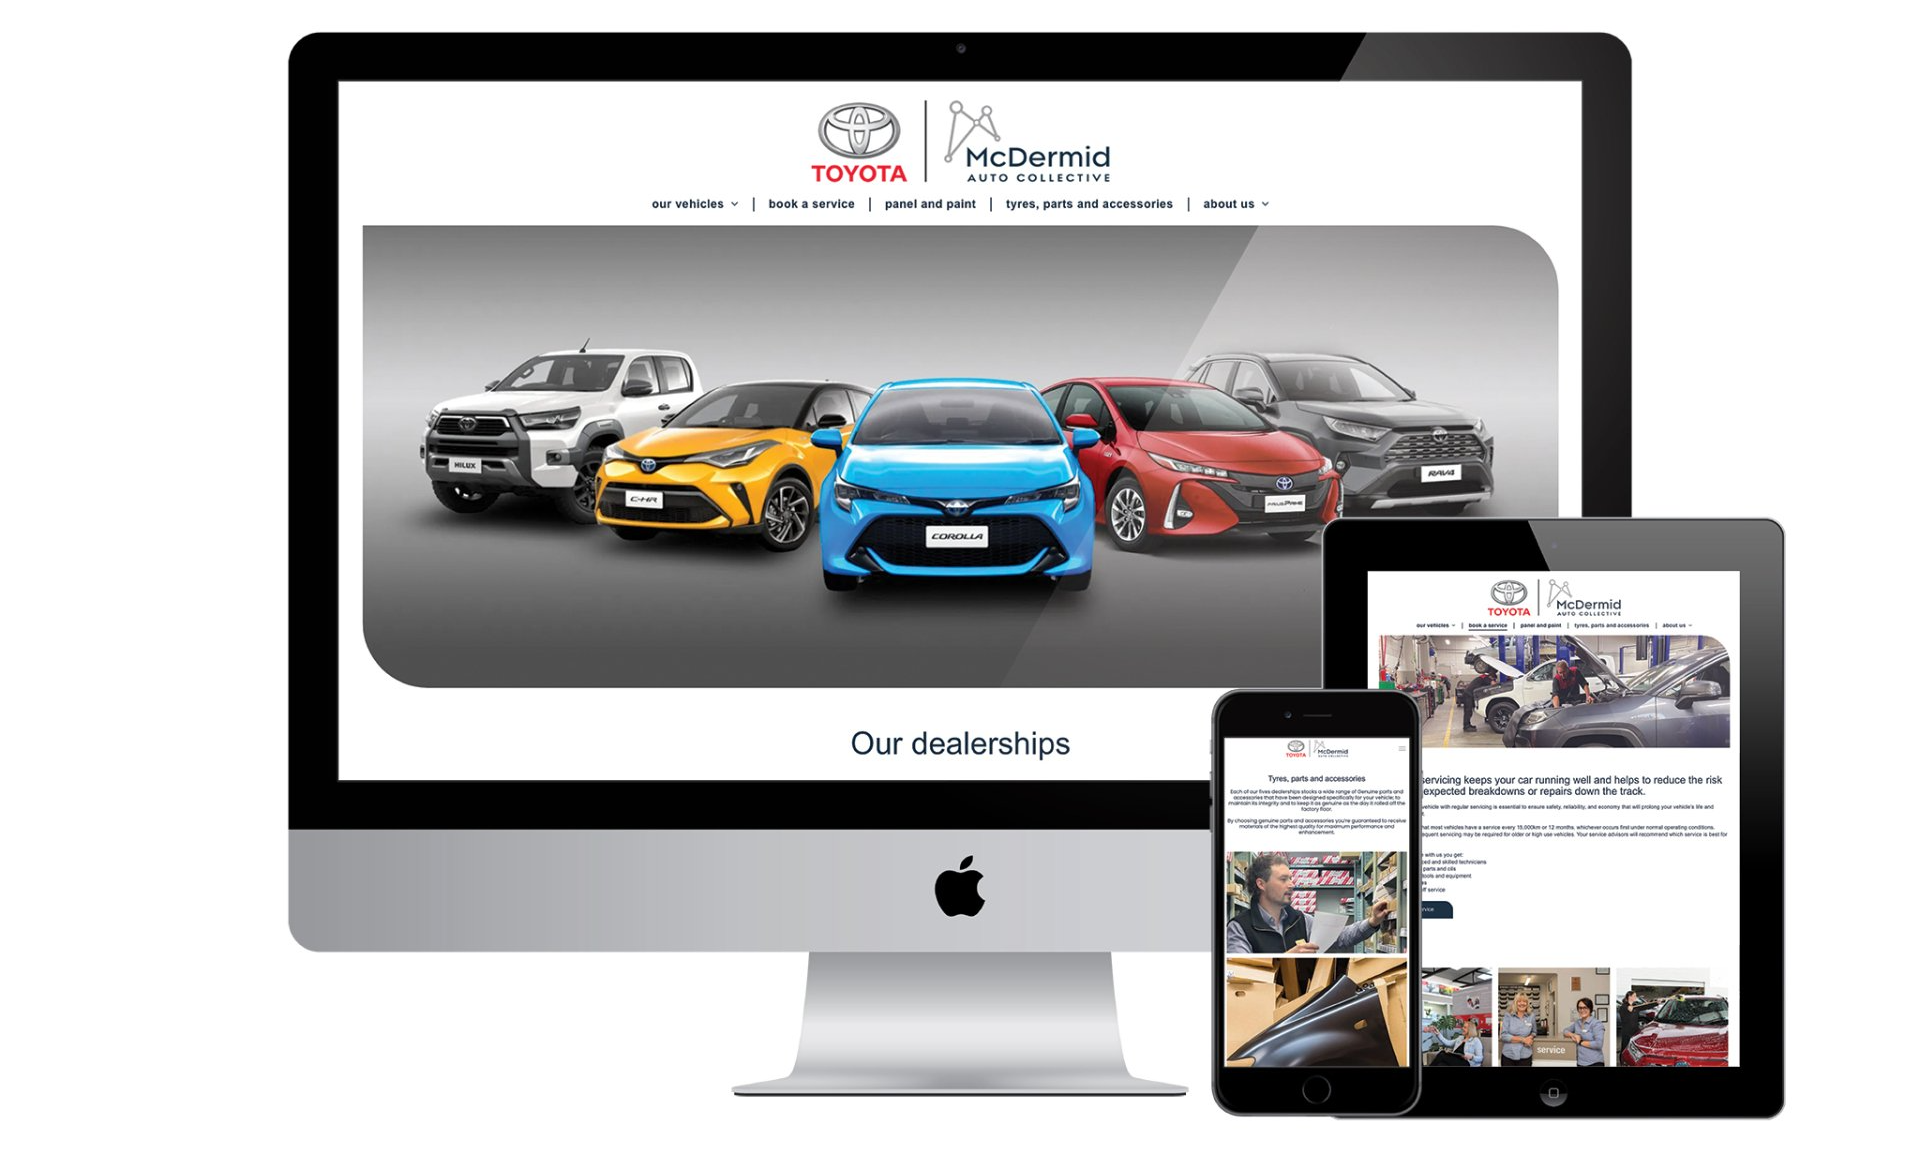 McDermid Auto Collective website designed by Vanilla Hayes creative graphic design  studio in Blenheim, Marlborough, New Zealand